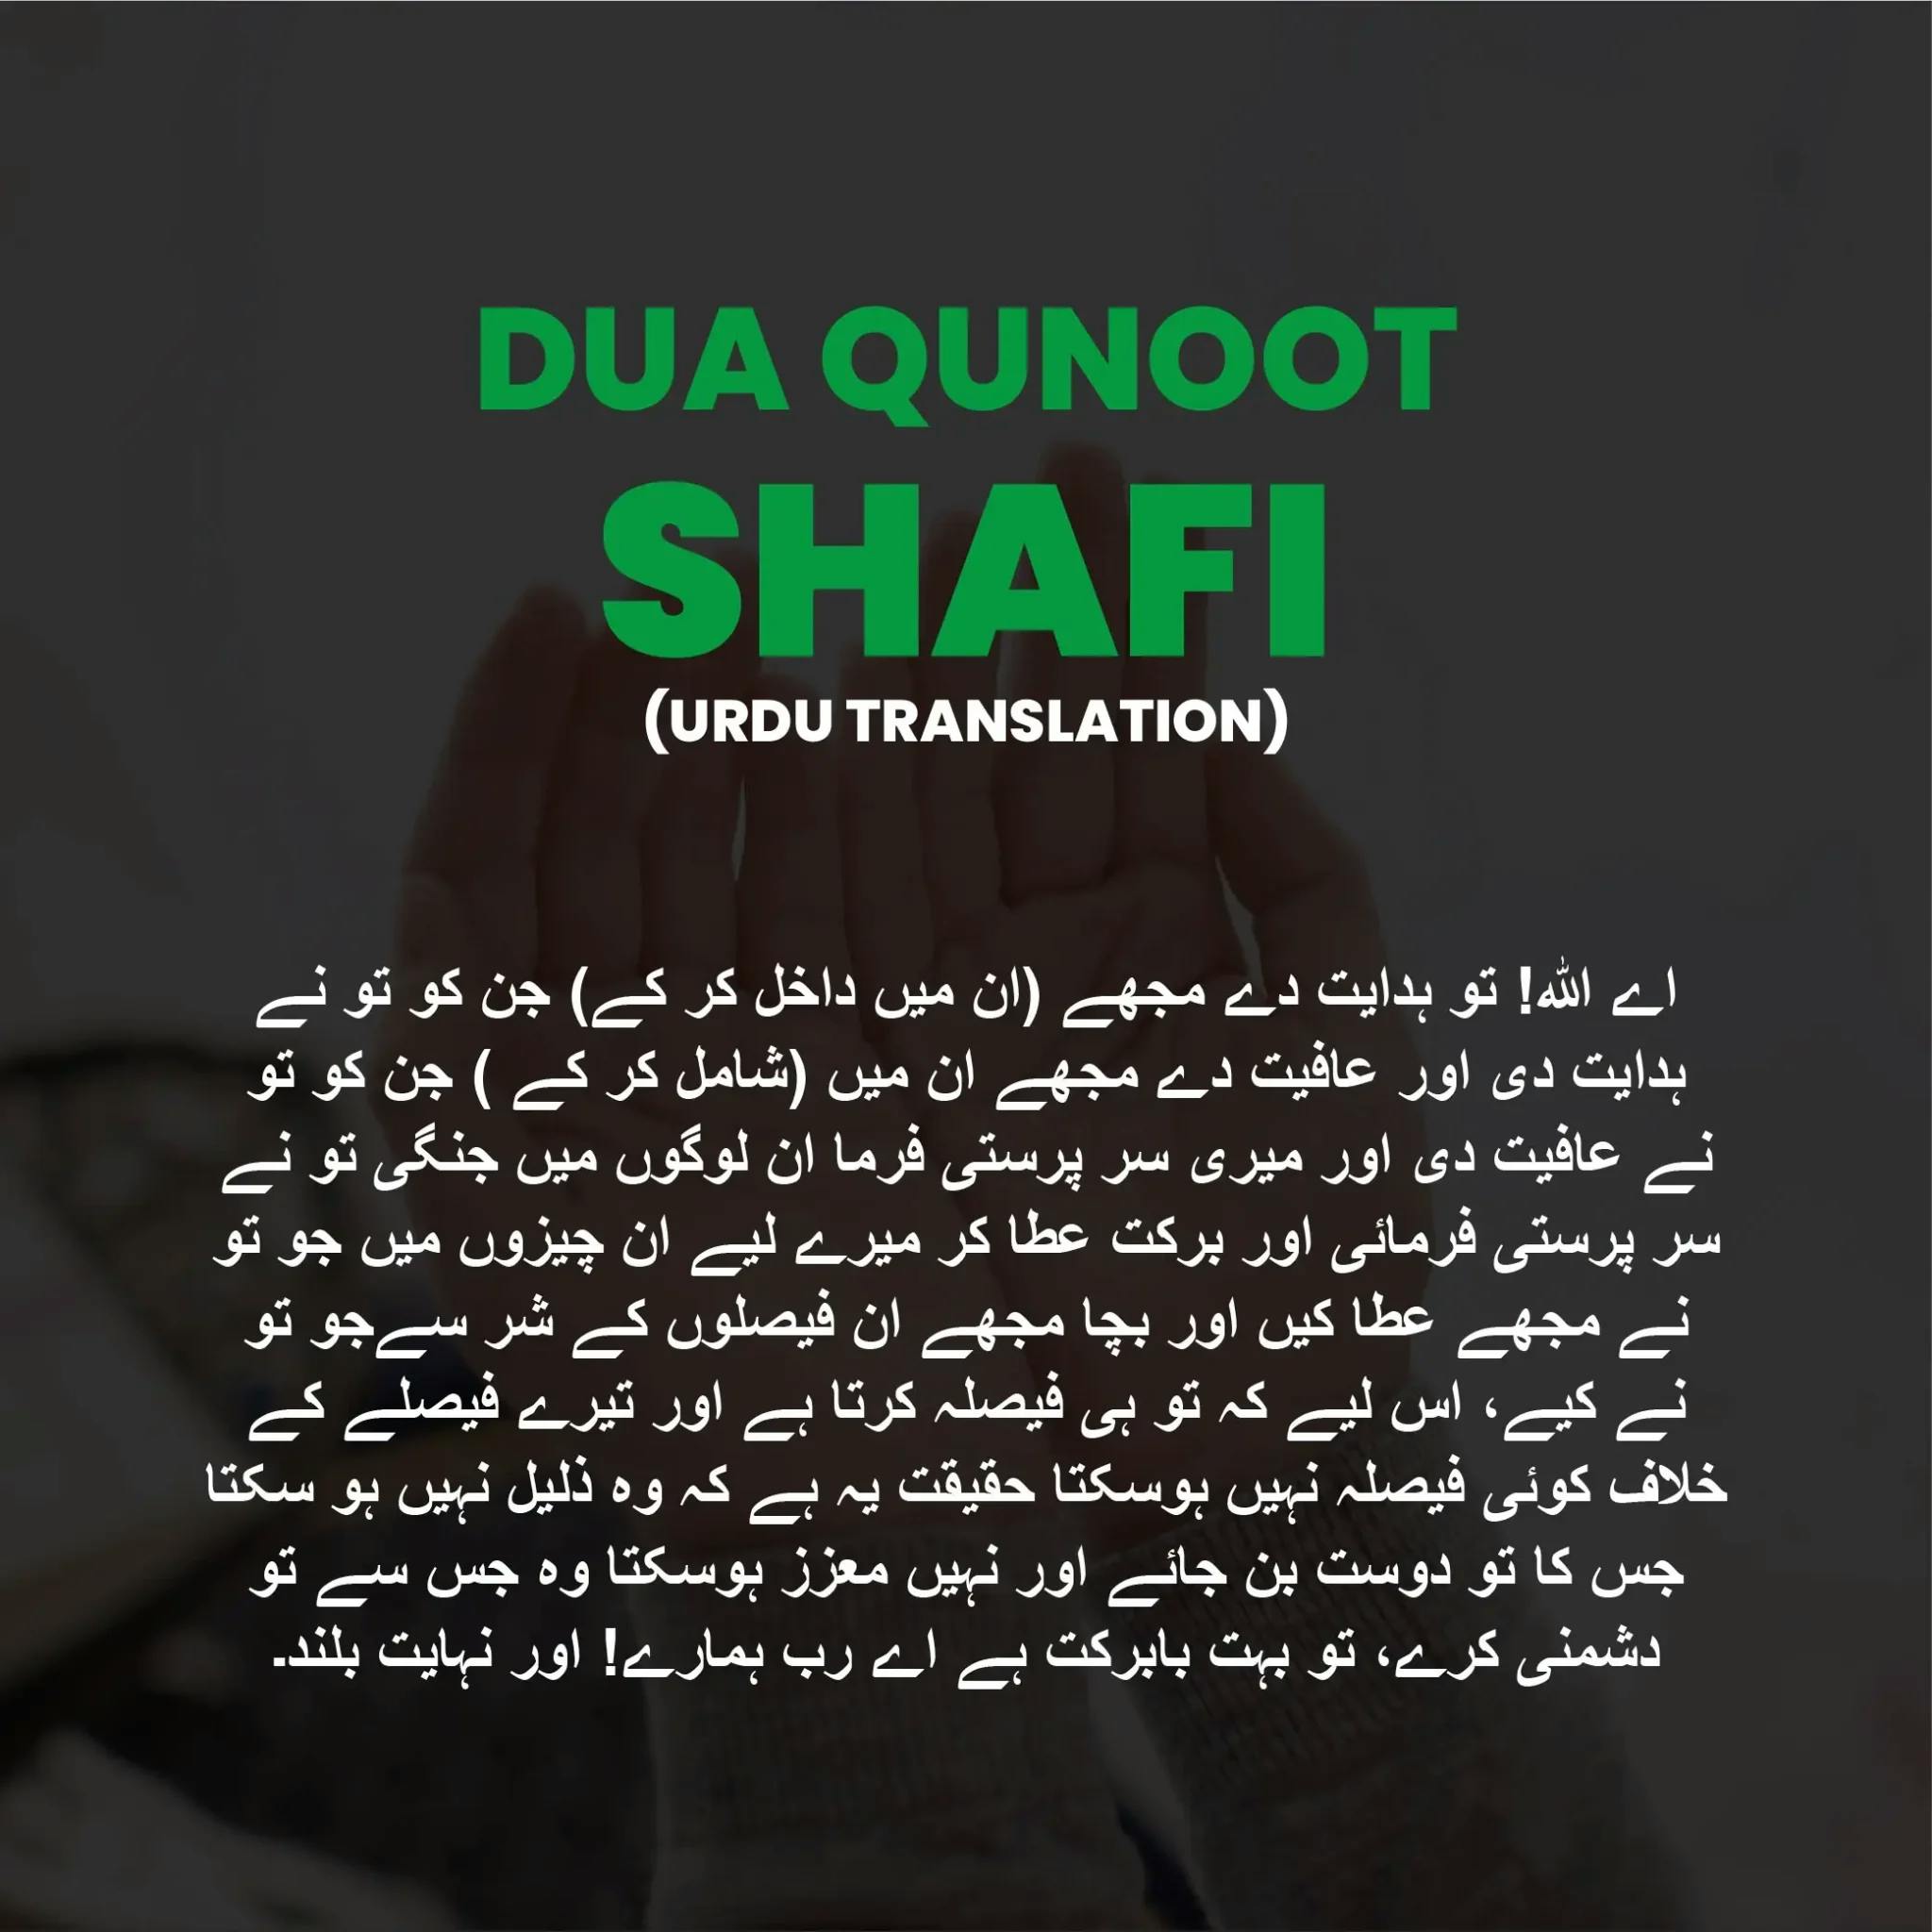 Complete dua qunoot urdu translation of shafi version 